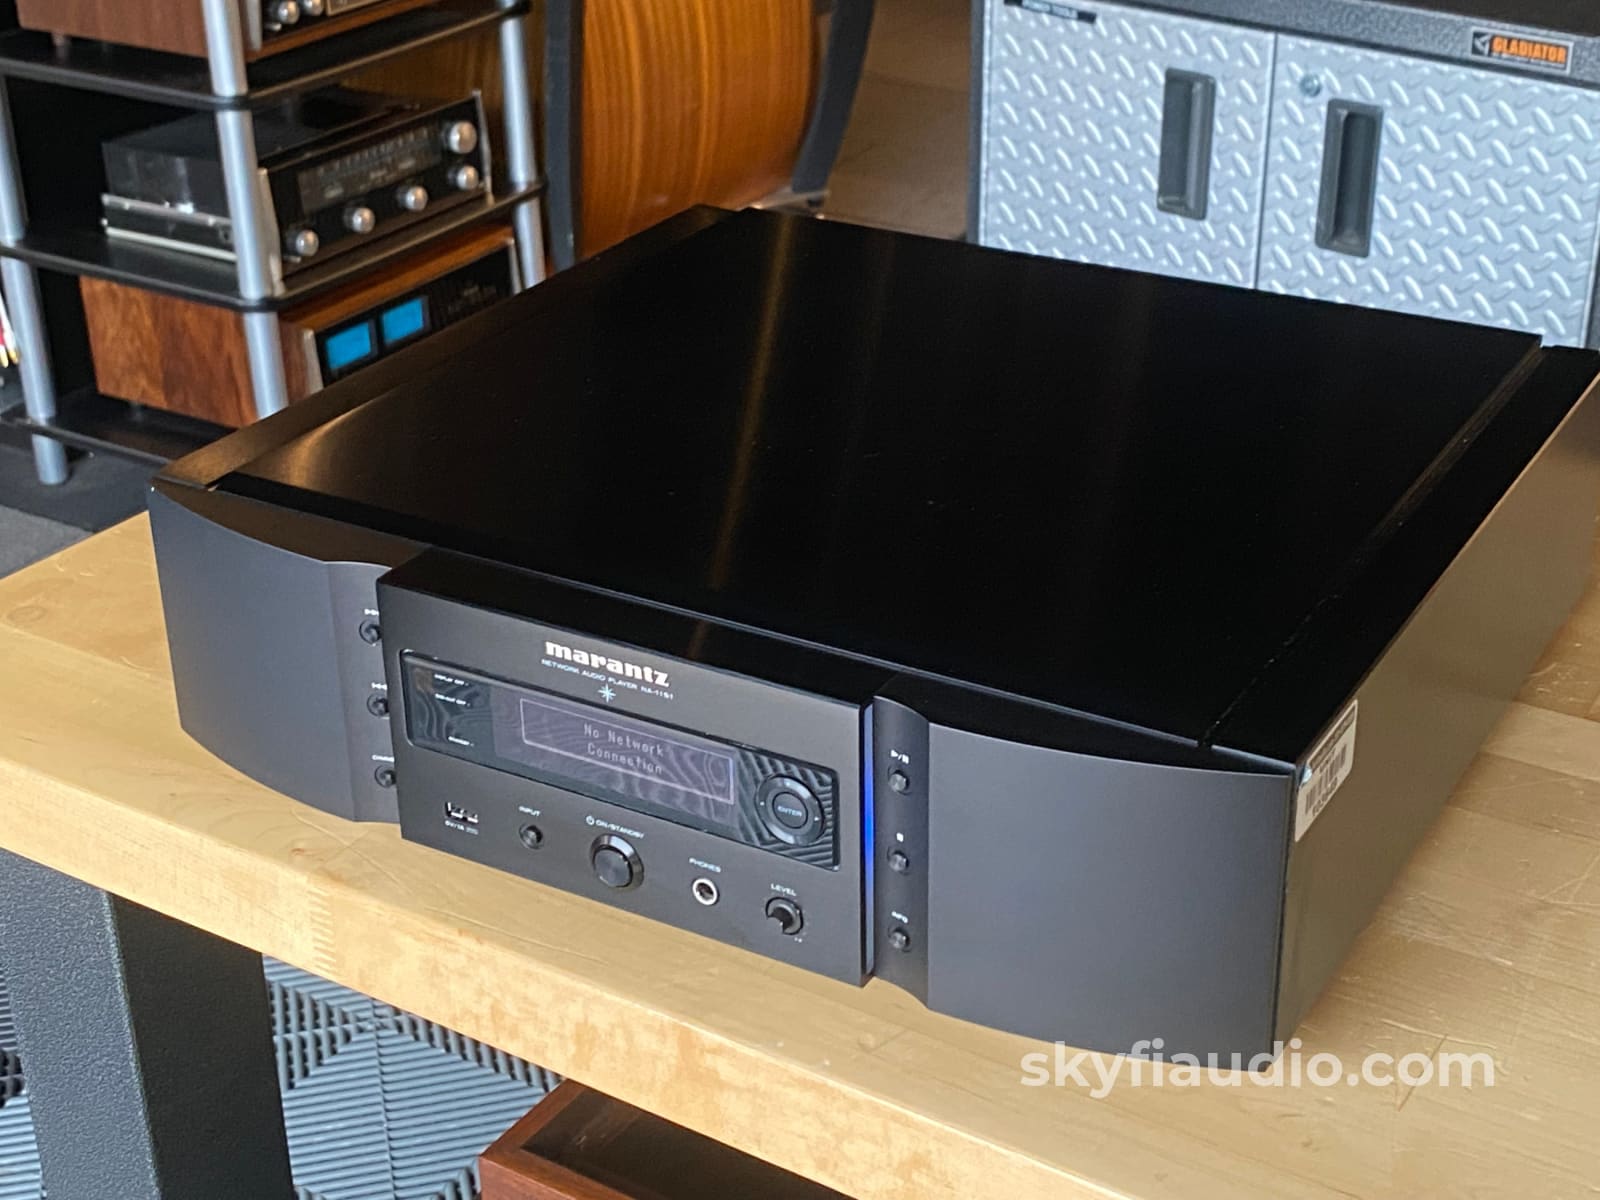 Marantz Na-11S1 Reference Series Network Audio Player/Streamer Dac Complete Cd + Digital